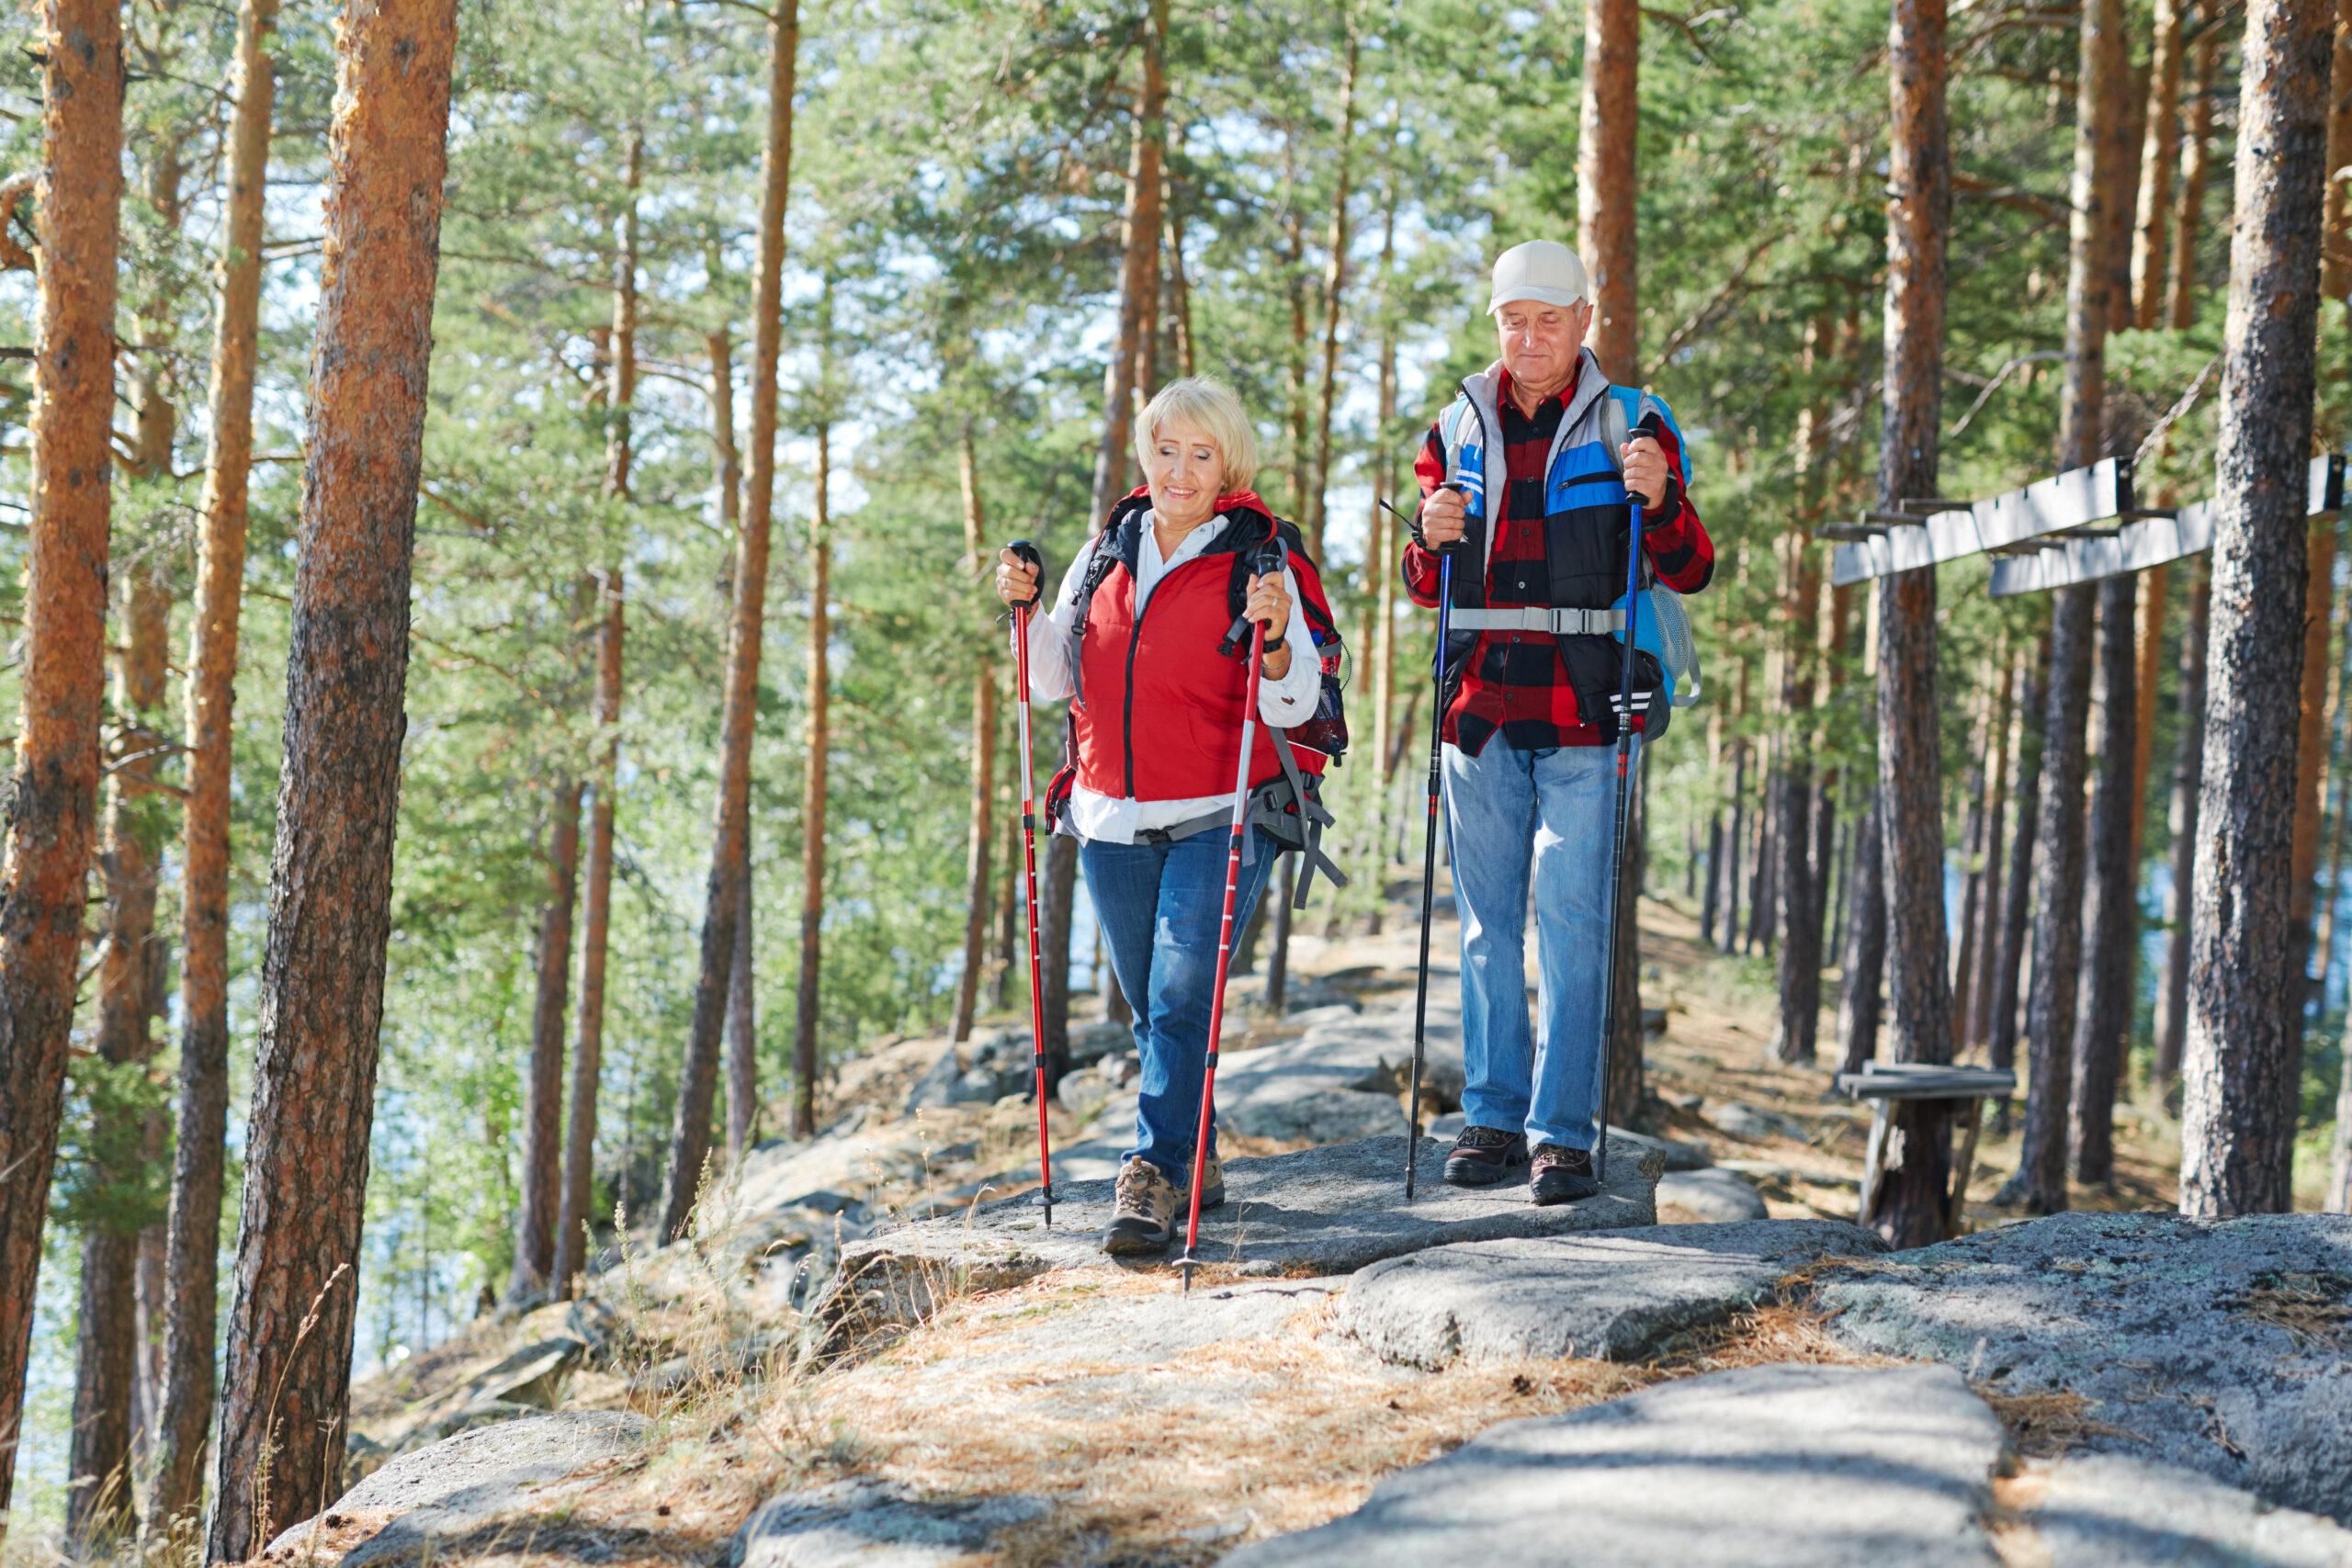 Senior tourists go trekking in the forest